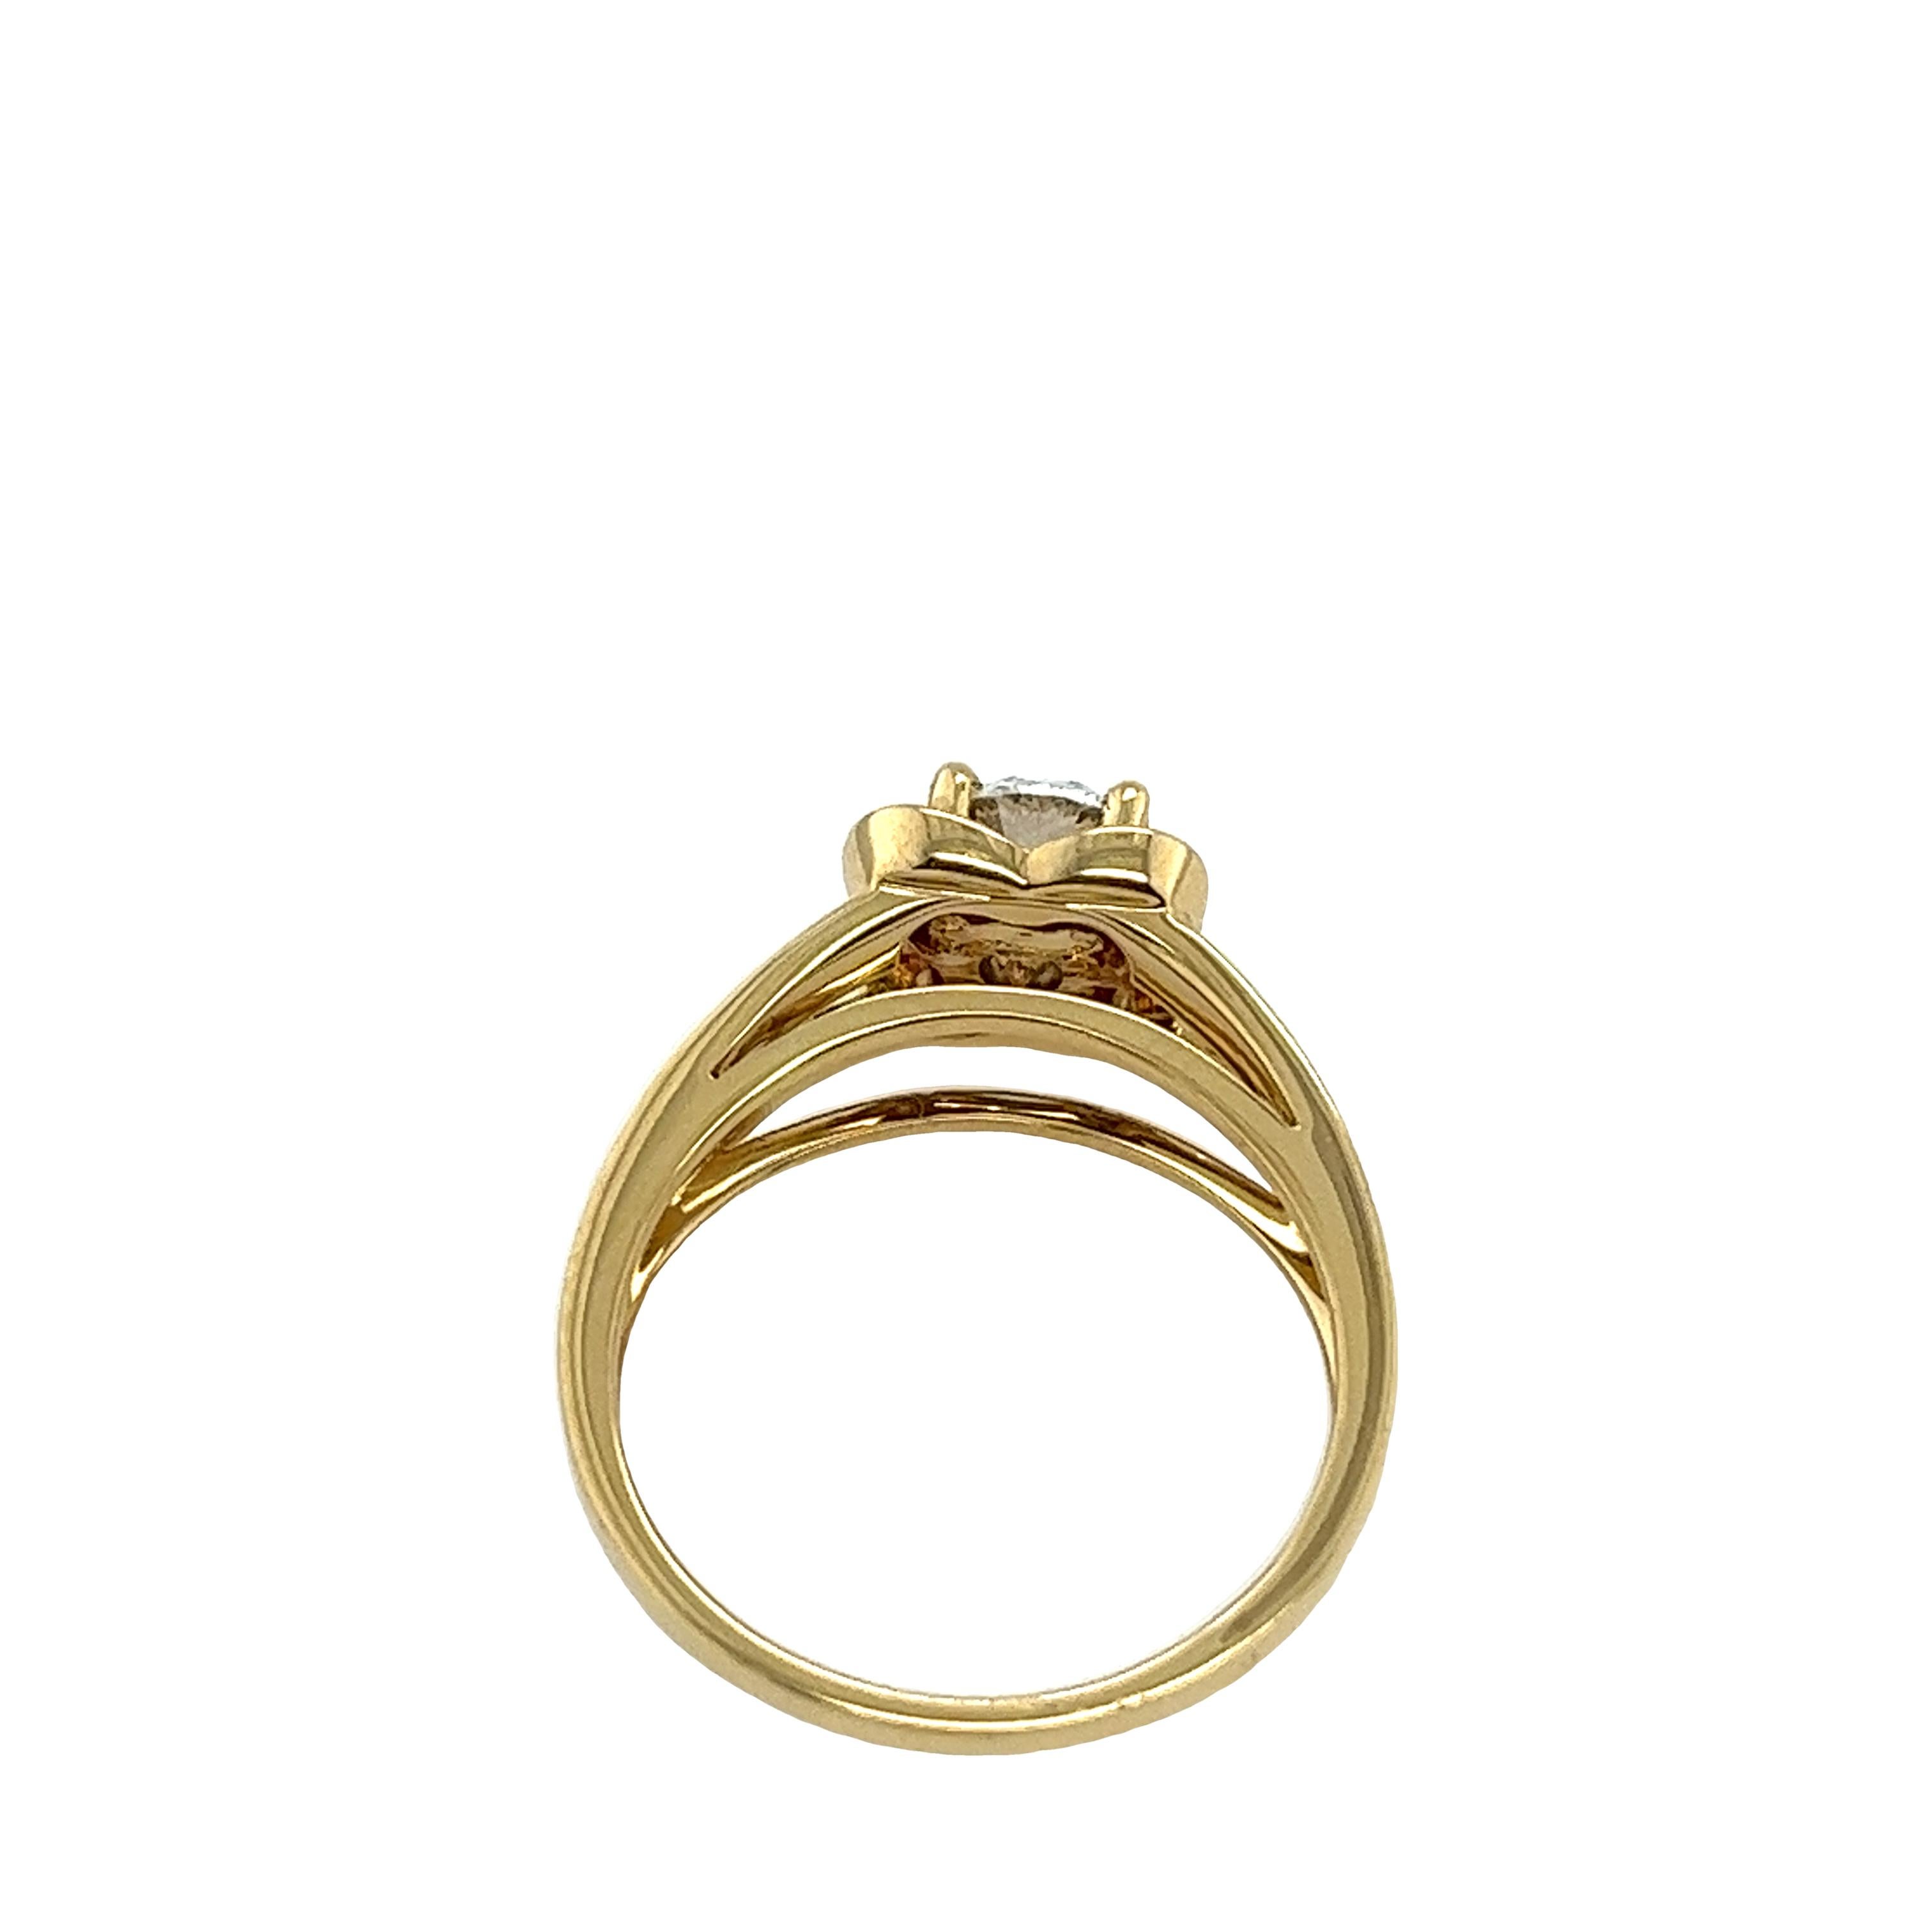 Mauboussin 18ct Yellow Gold Diamond Ring, Set With 0.90ct Gia D/VS1 Diamond For Sale 3